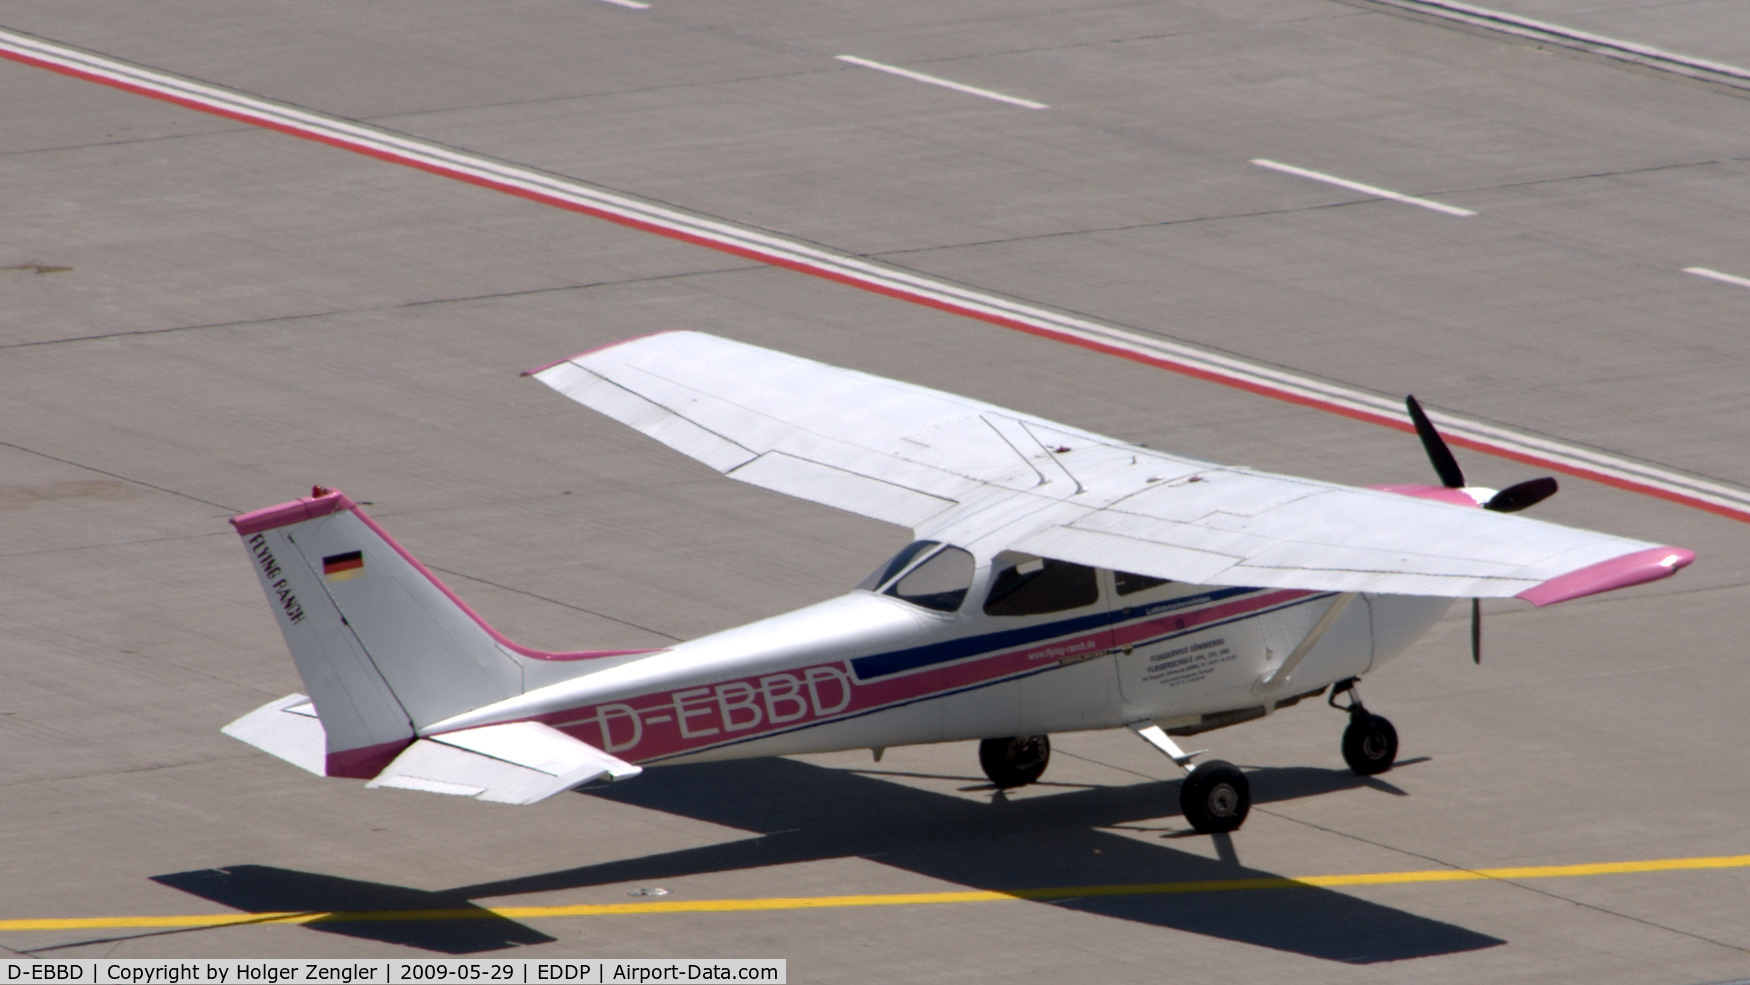 D-EBBD, Reims FR172F Reims Rocket C/N 0066, A Cessna 172 from Stuttgart for whatever at LEJ - but pink!